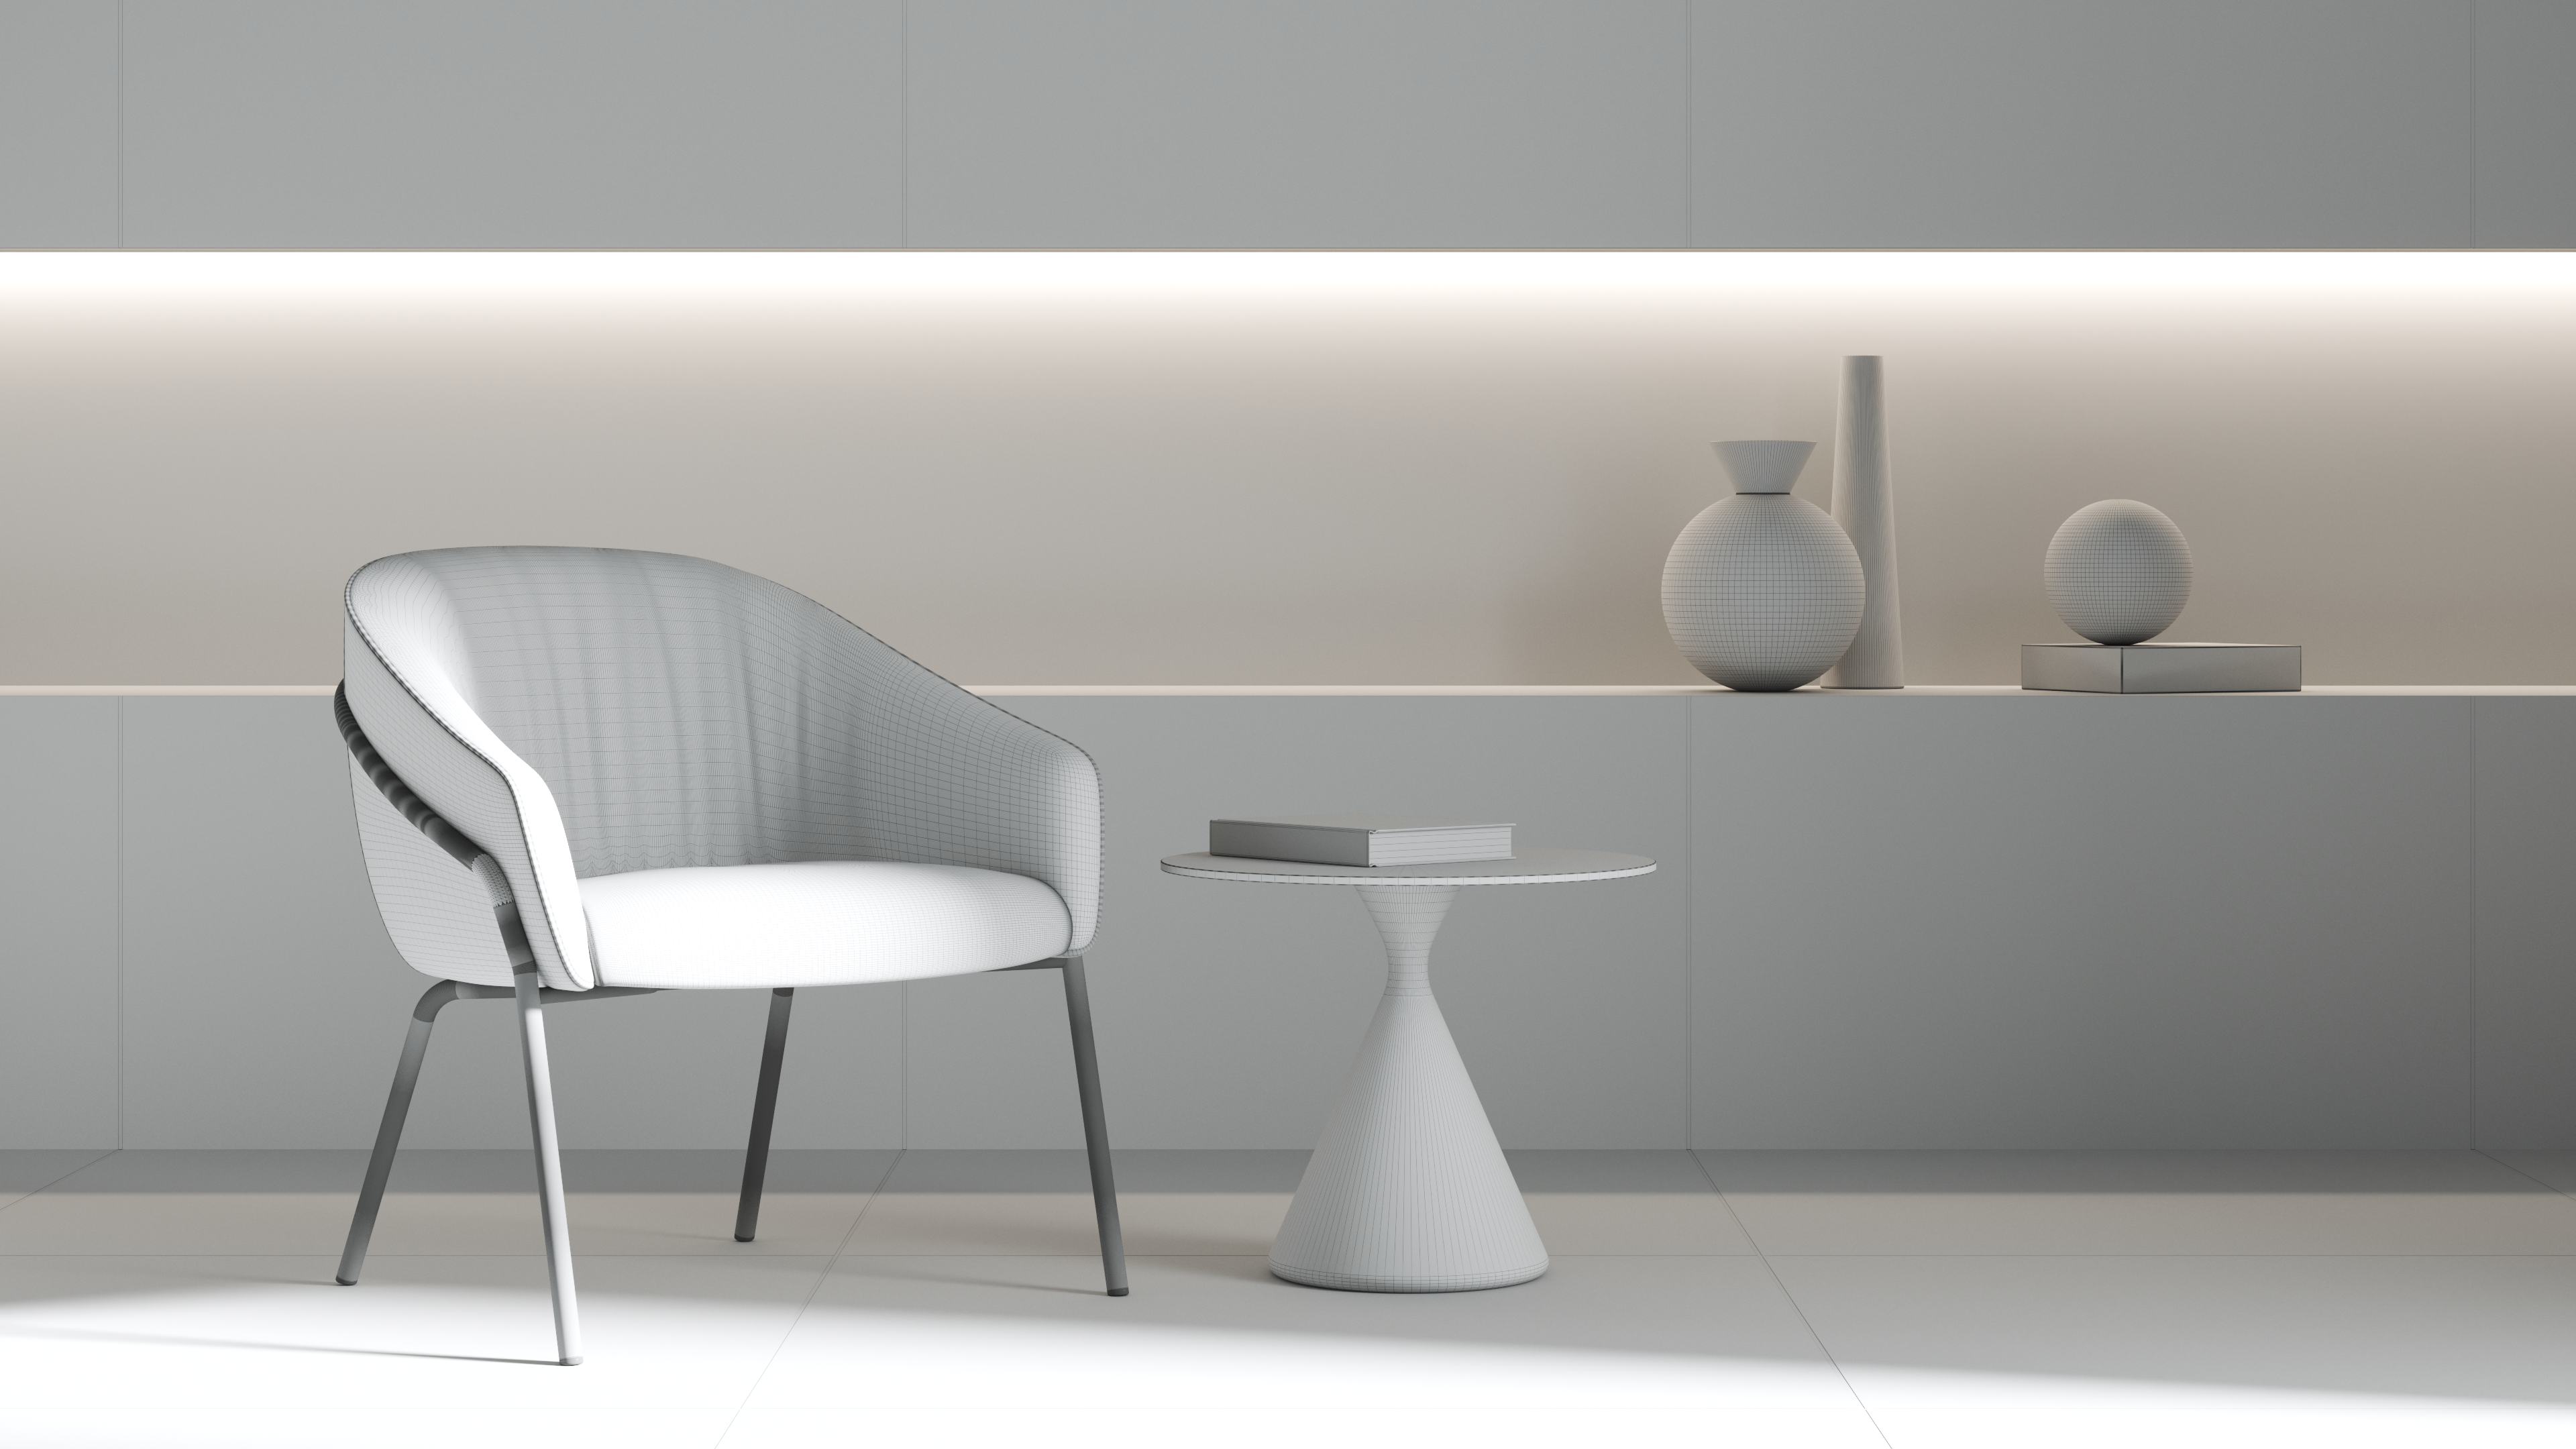 Furniture - Clay Render -  CGI 3D Visualisation